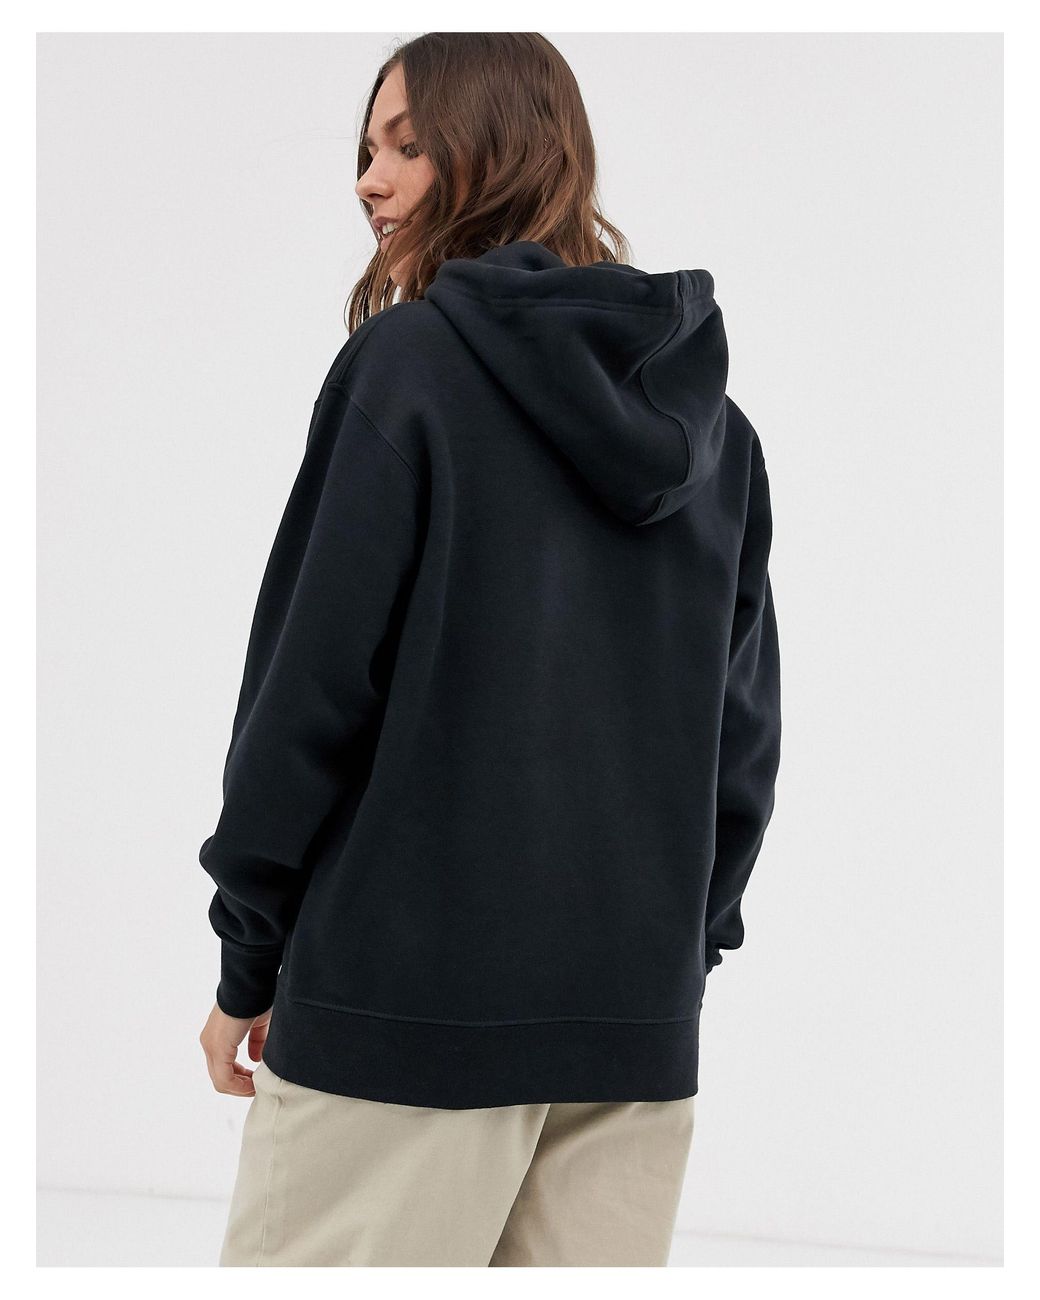 hoodie nike oversize